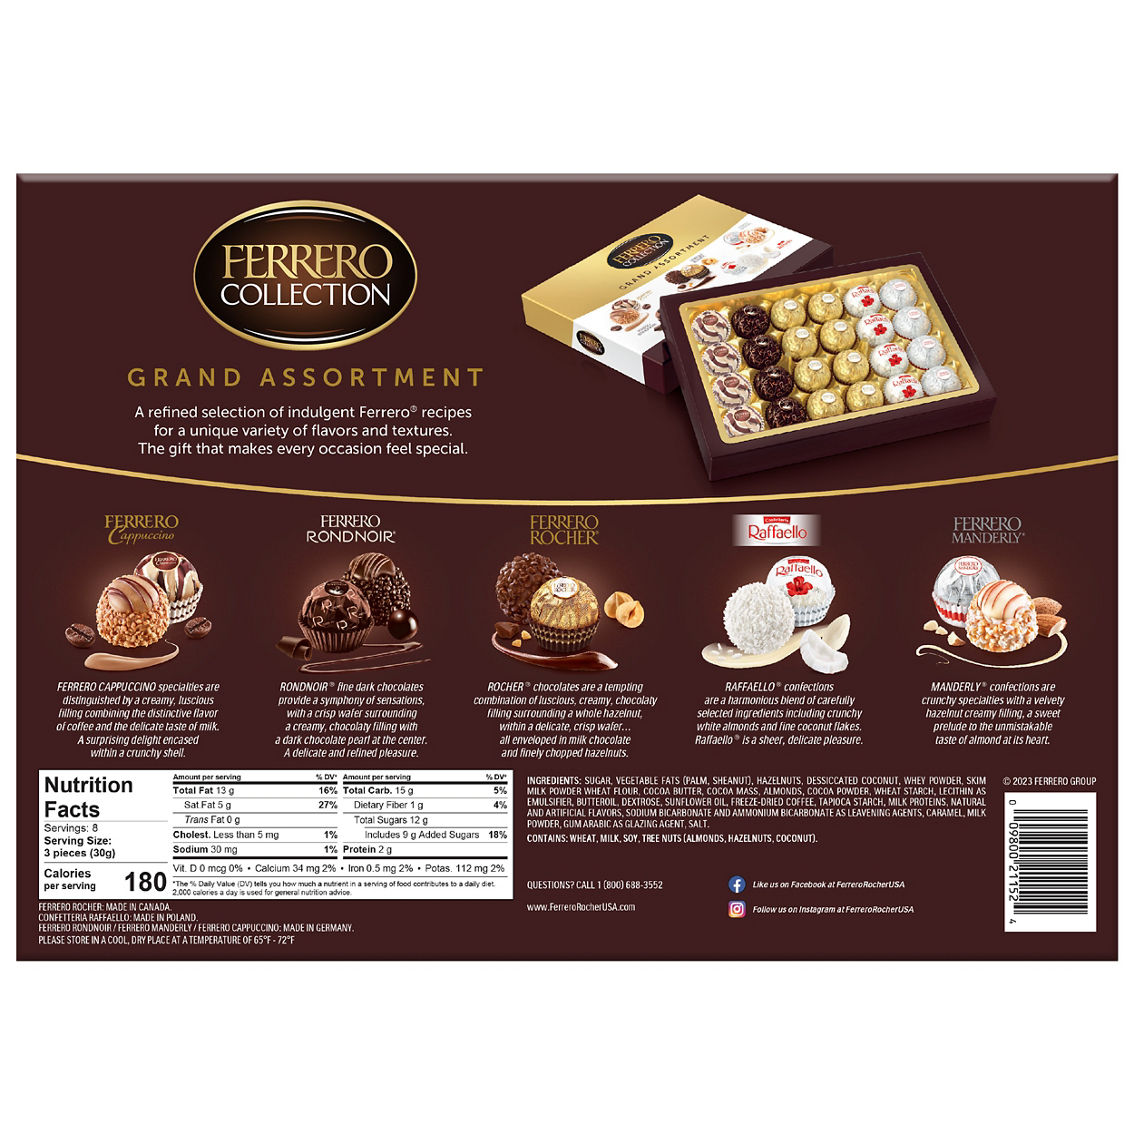 Ferrero Grand Assortment Pralines, 24 ct. - Image 2 of 2